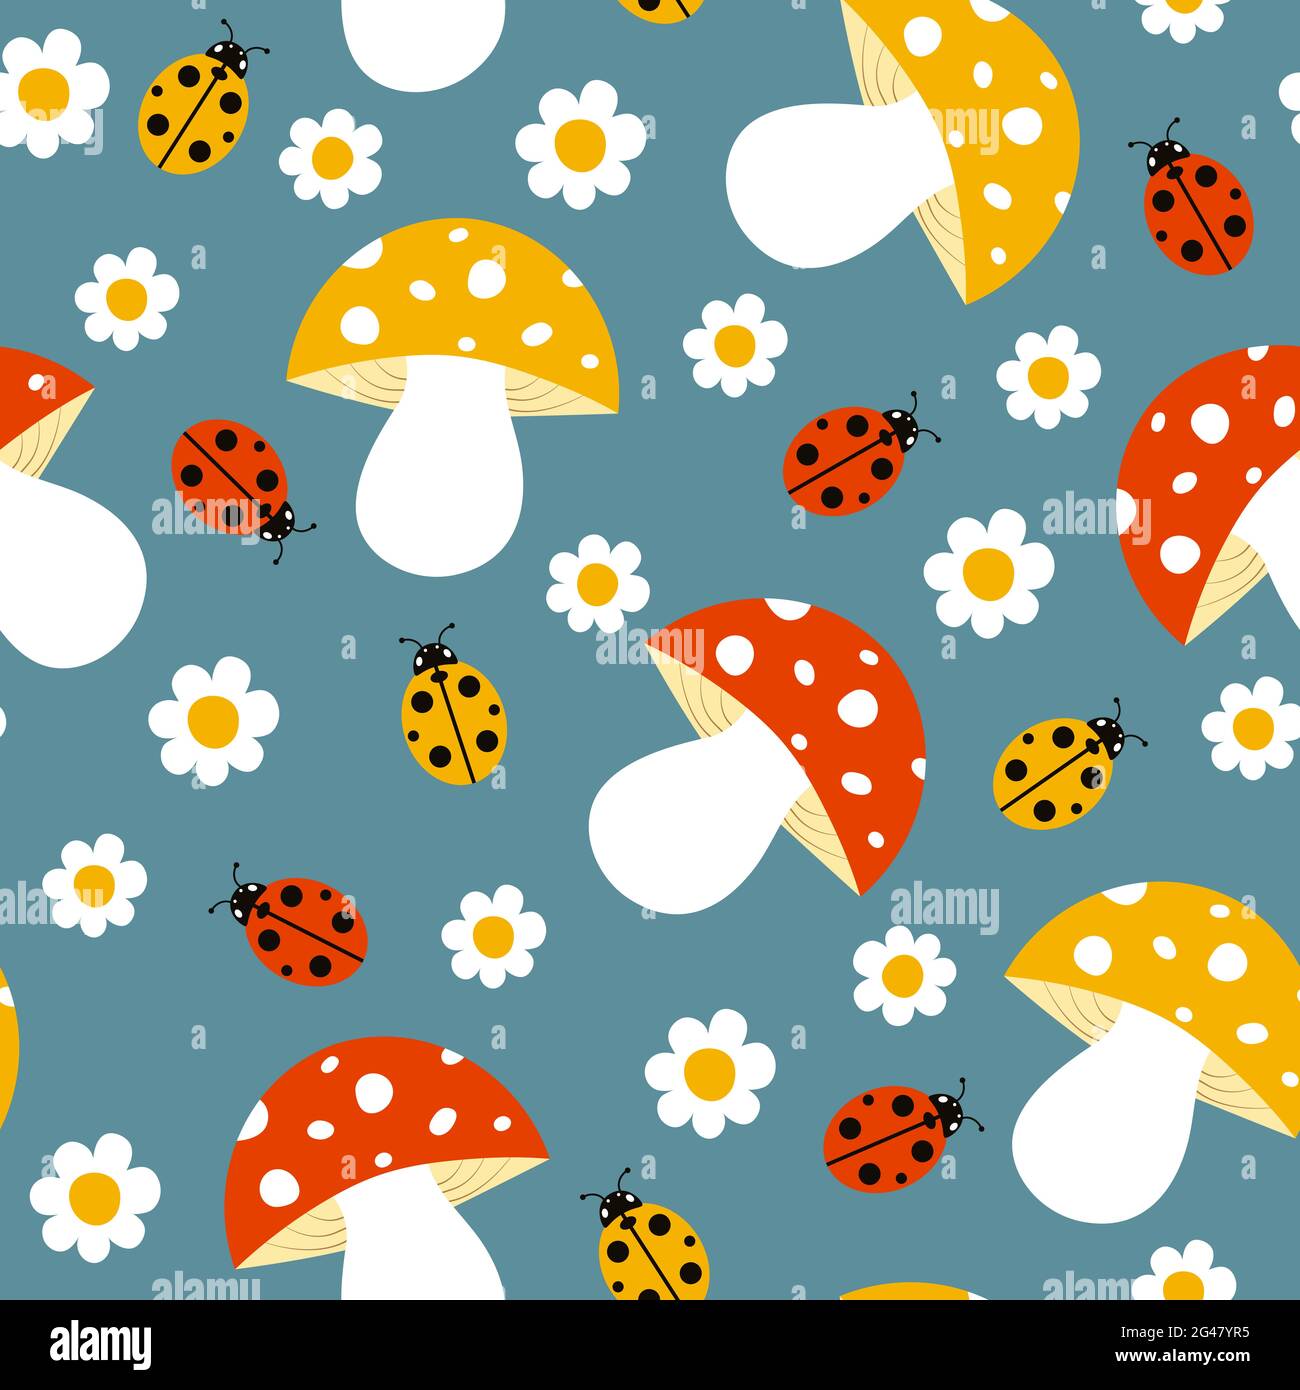 Mushroom Wallpaper Images  Free Download on Freepik